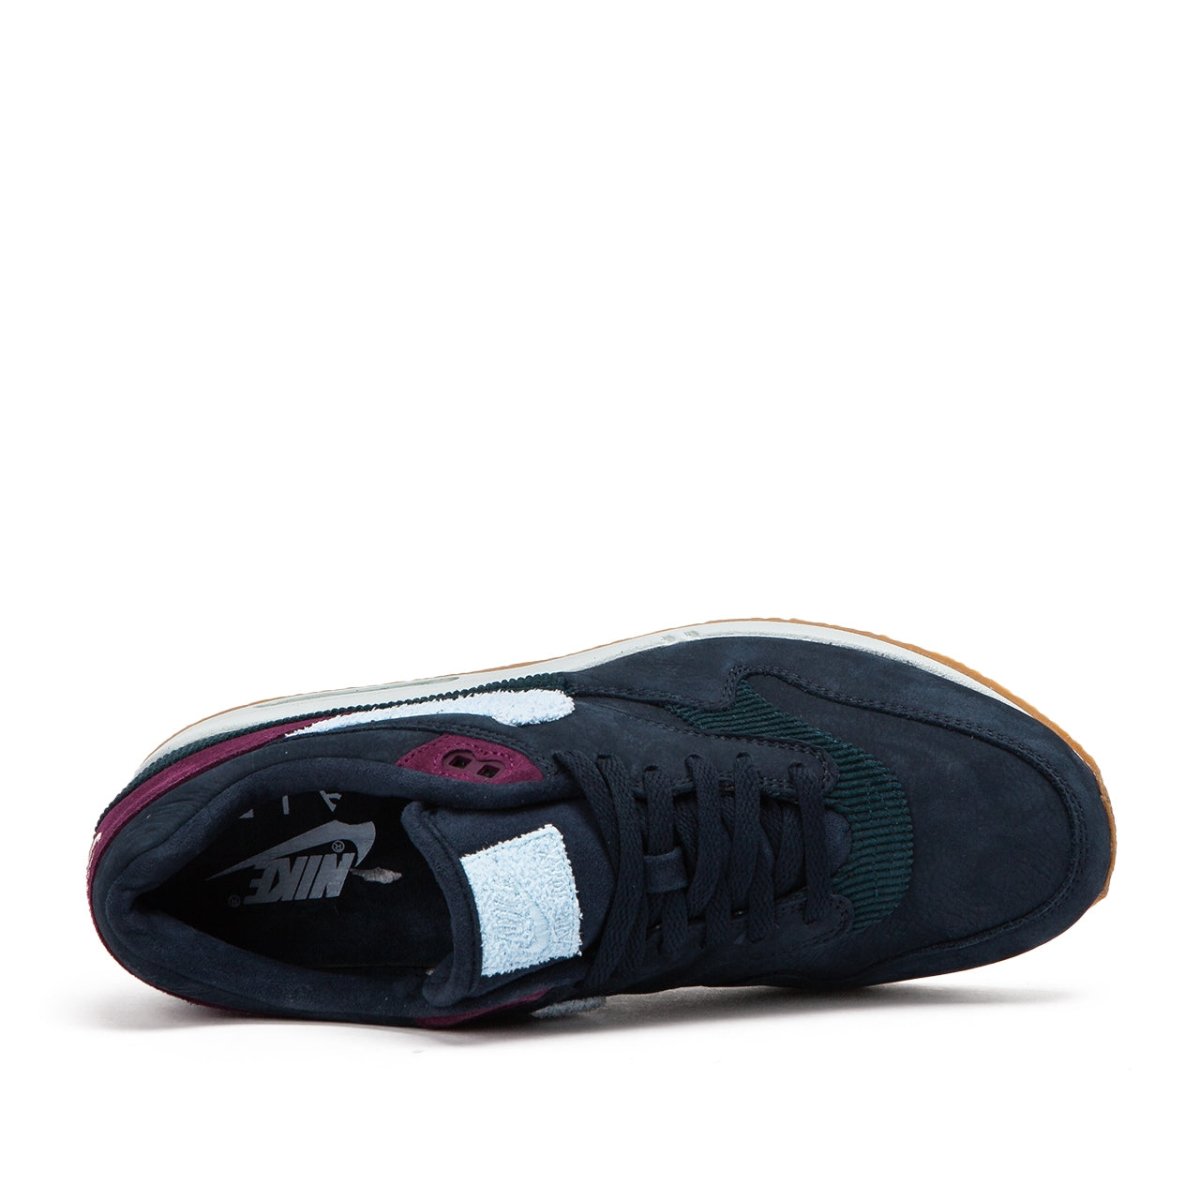 Nike Air Max 1 Crepe Sole (Dark Obsidian Cobalt) CD7861-400 – Store